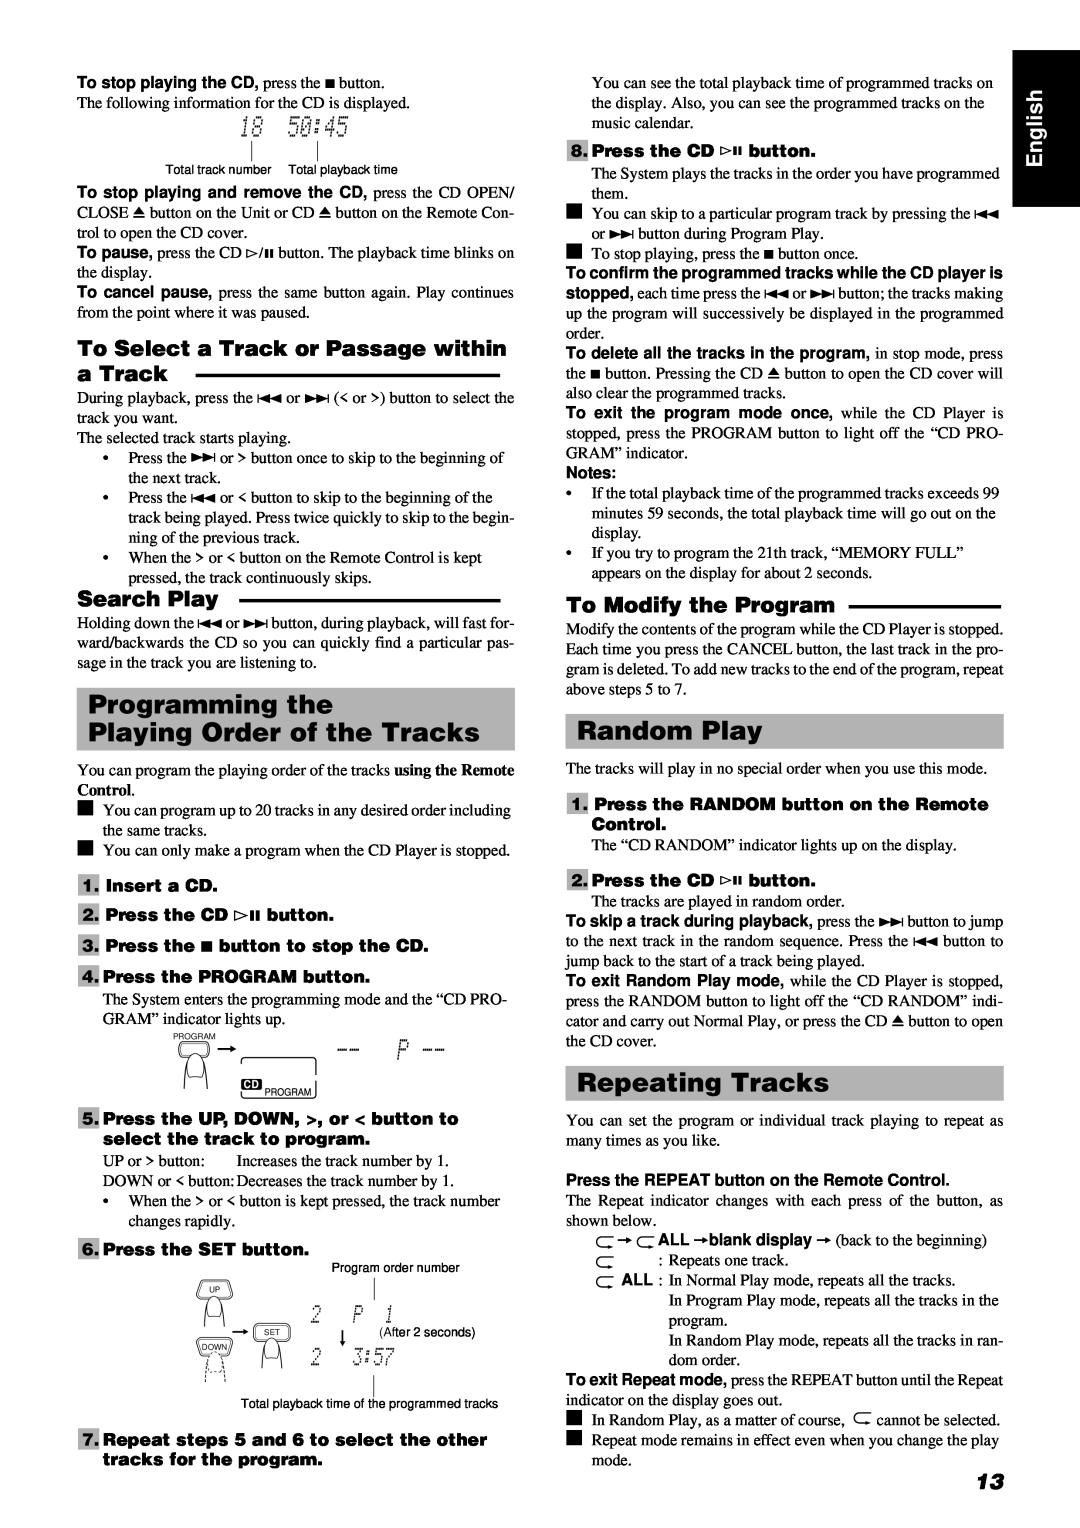 JVC UX-V5R Programming the Playing Order of the Tracks, Random Play, Repeating Tracks, Search Play, To Modify the Program 